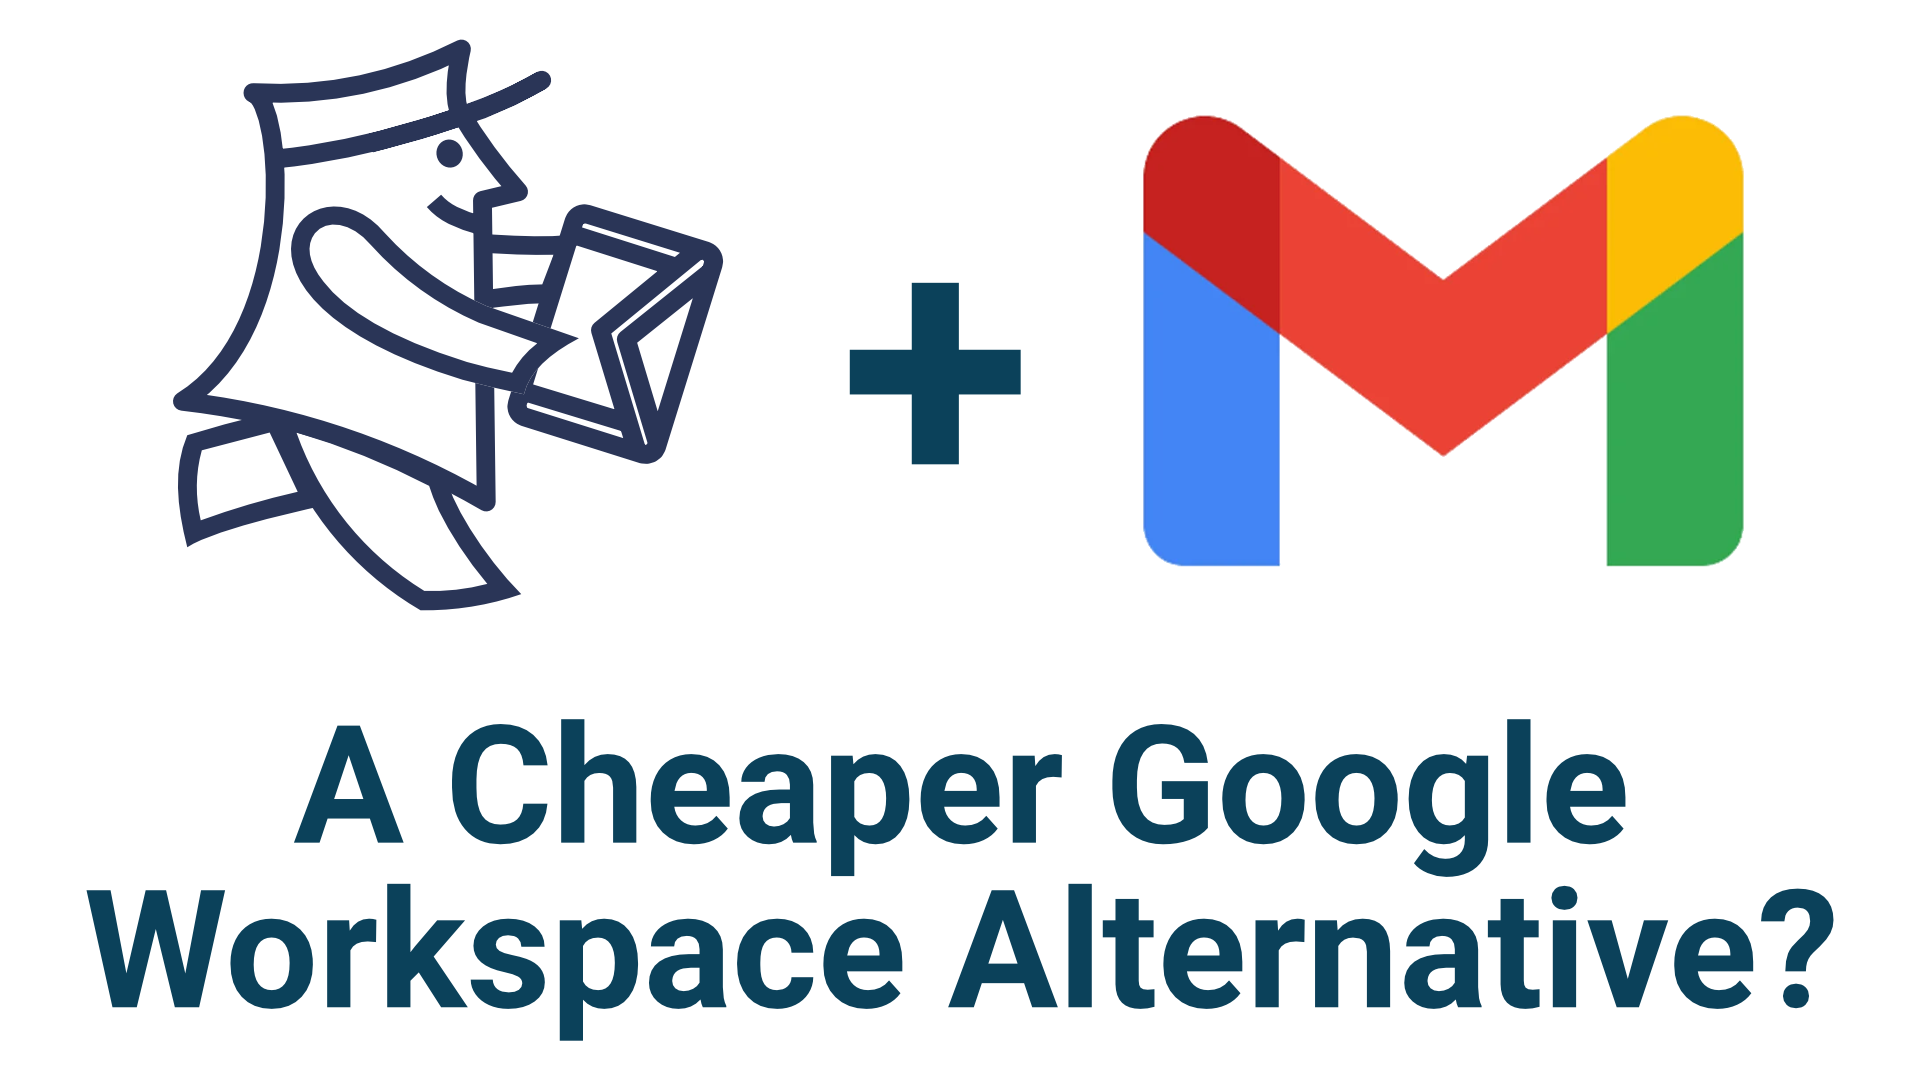 Gmailify: A Cheap Google Workspace Alternative for Gmail